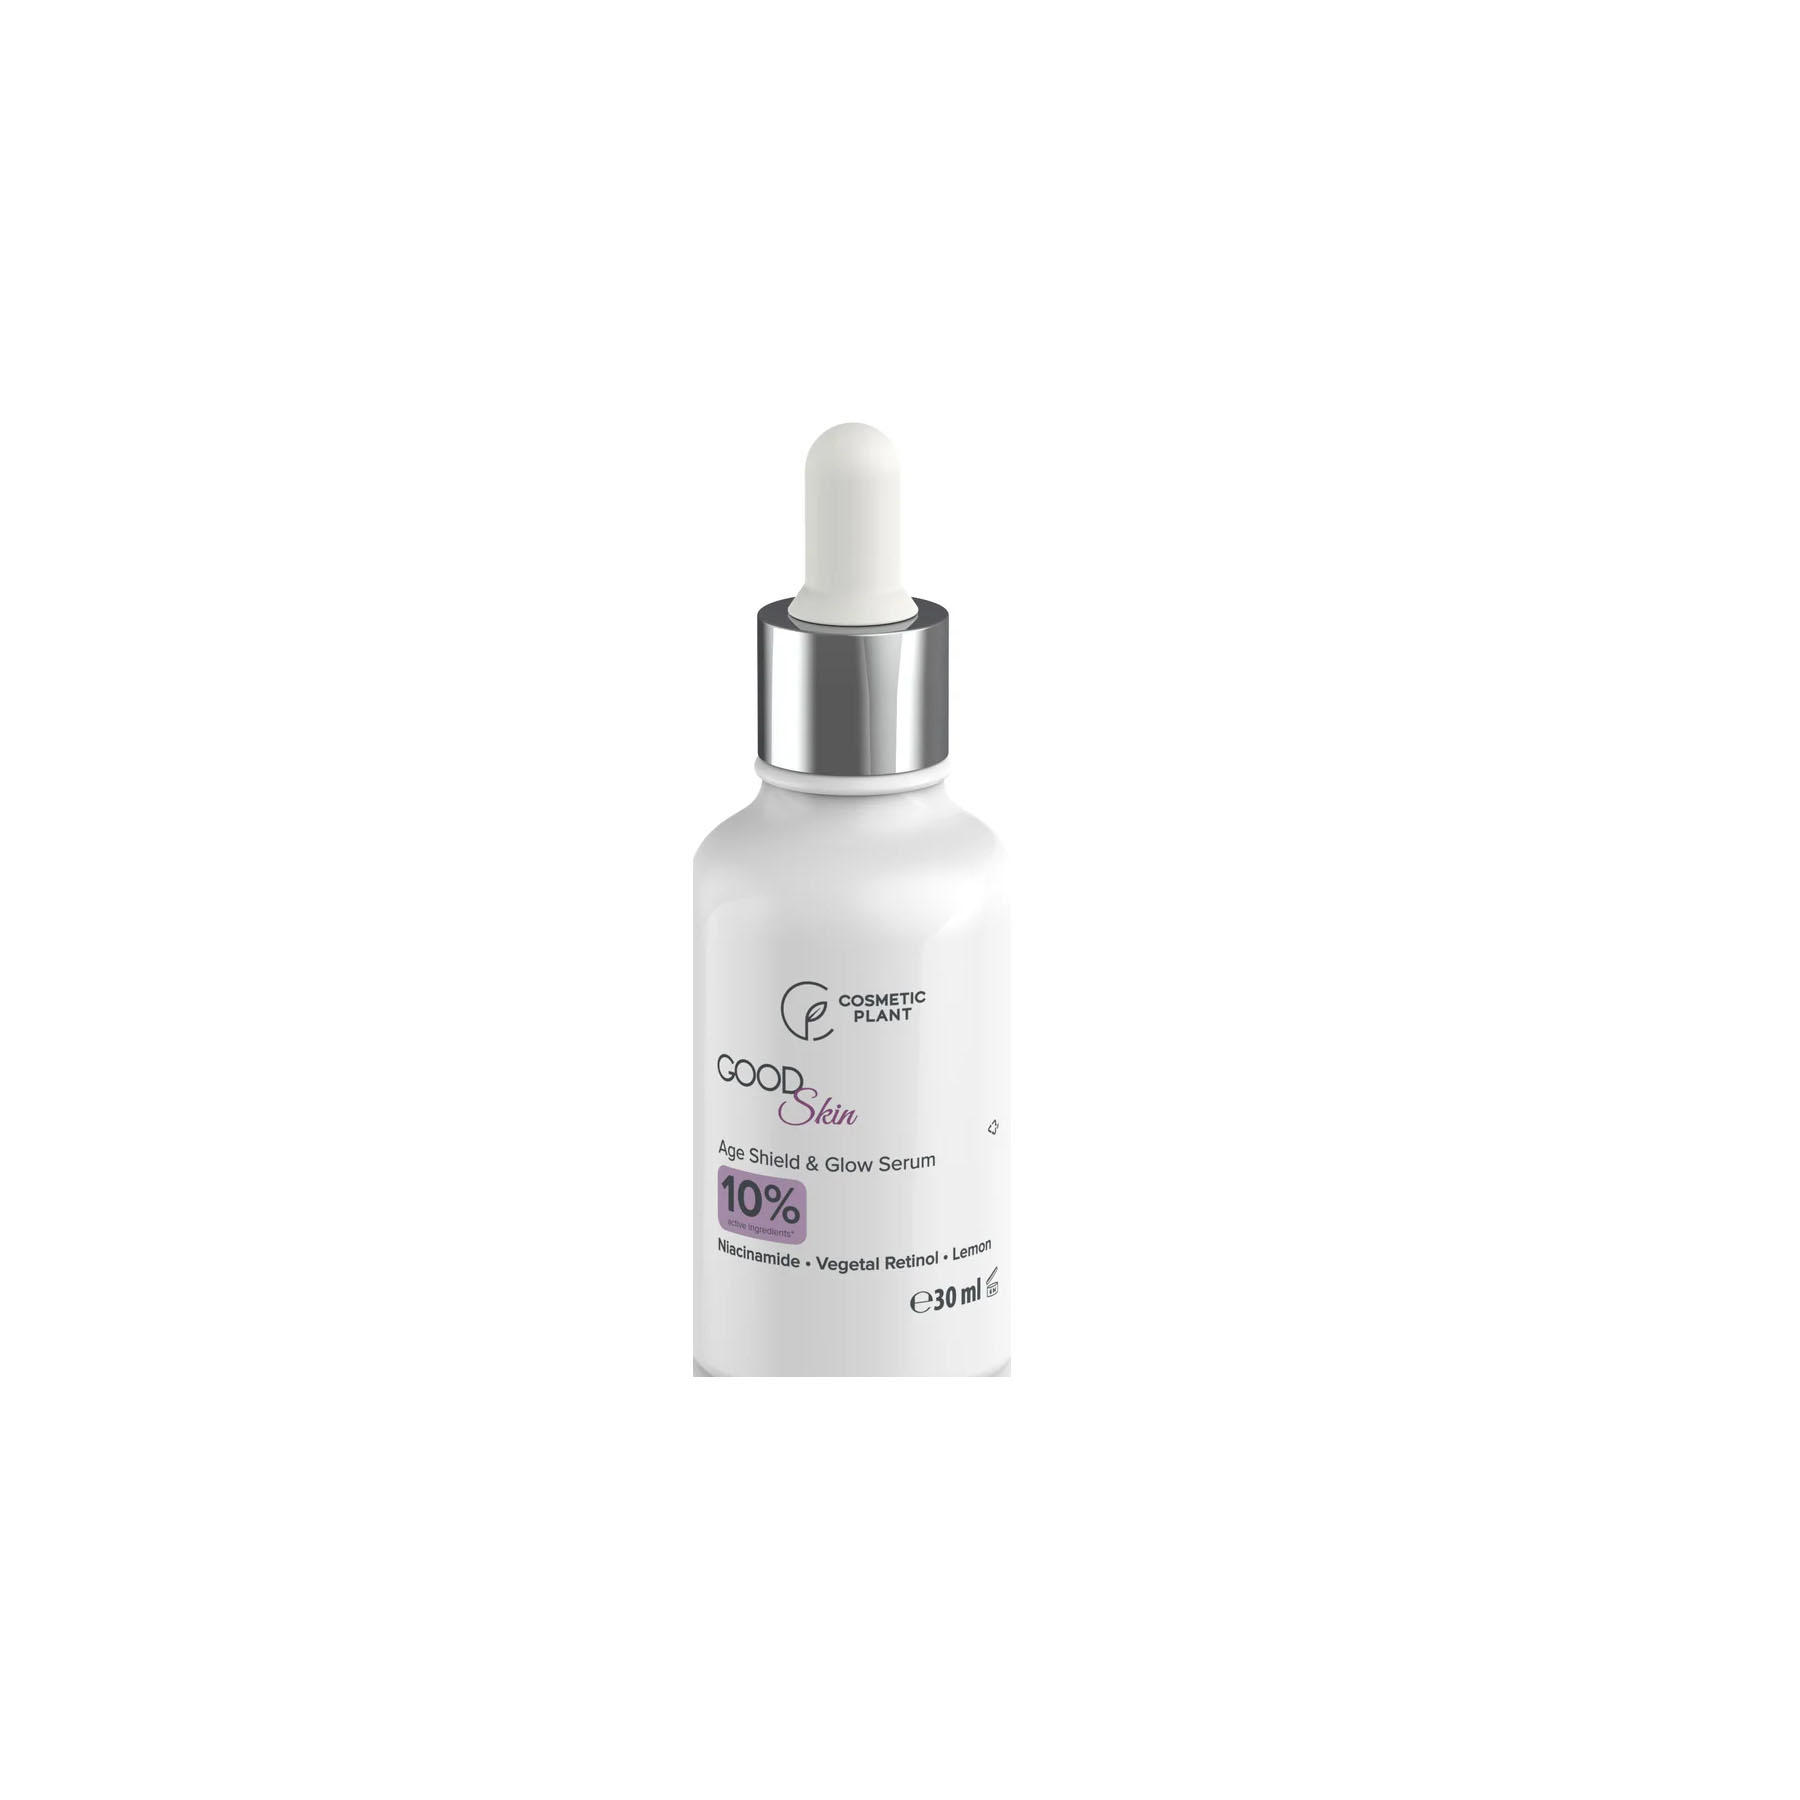 Good Skin Age Shield & Glow Serum cu Niacinamida Vegetal Retinol si Extract de Lamaie 30 mililitri Cosmetic Plant